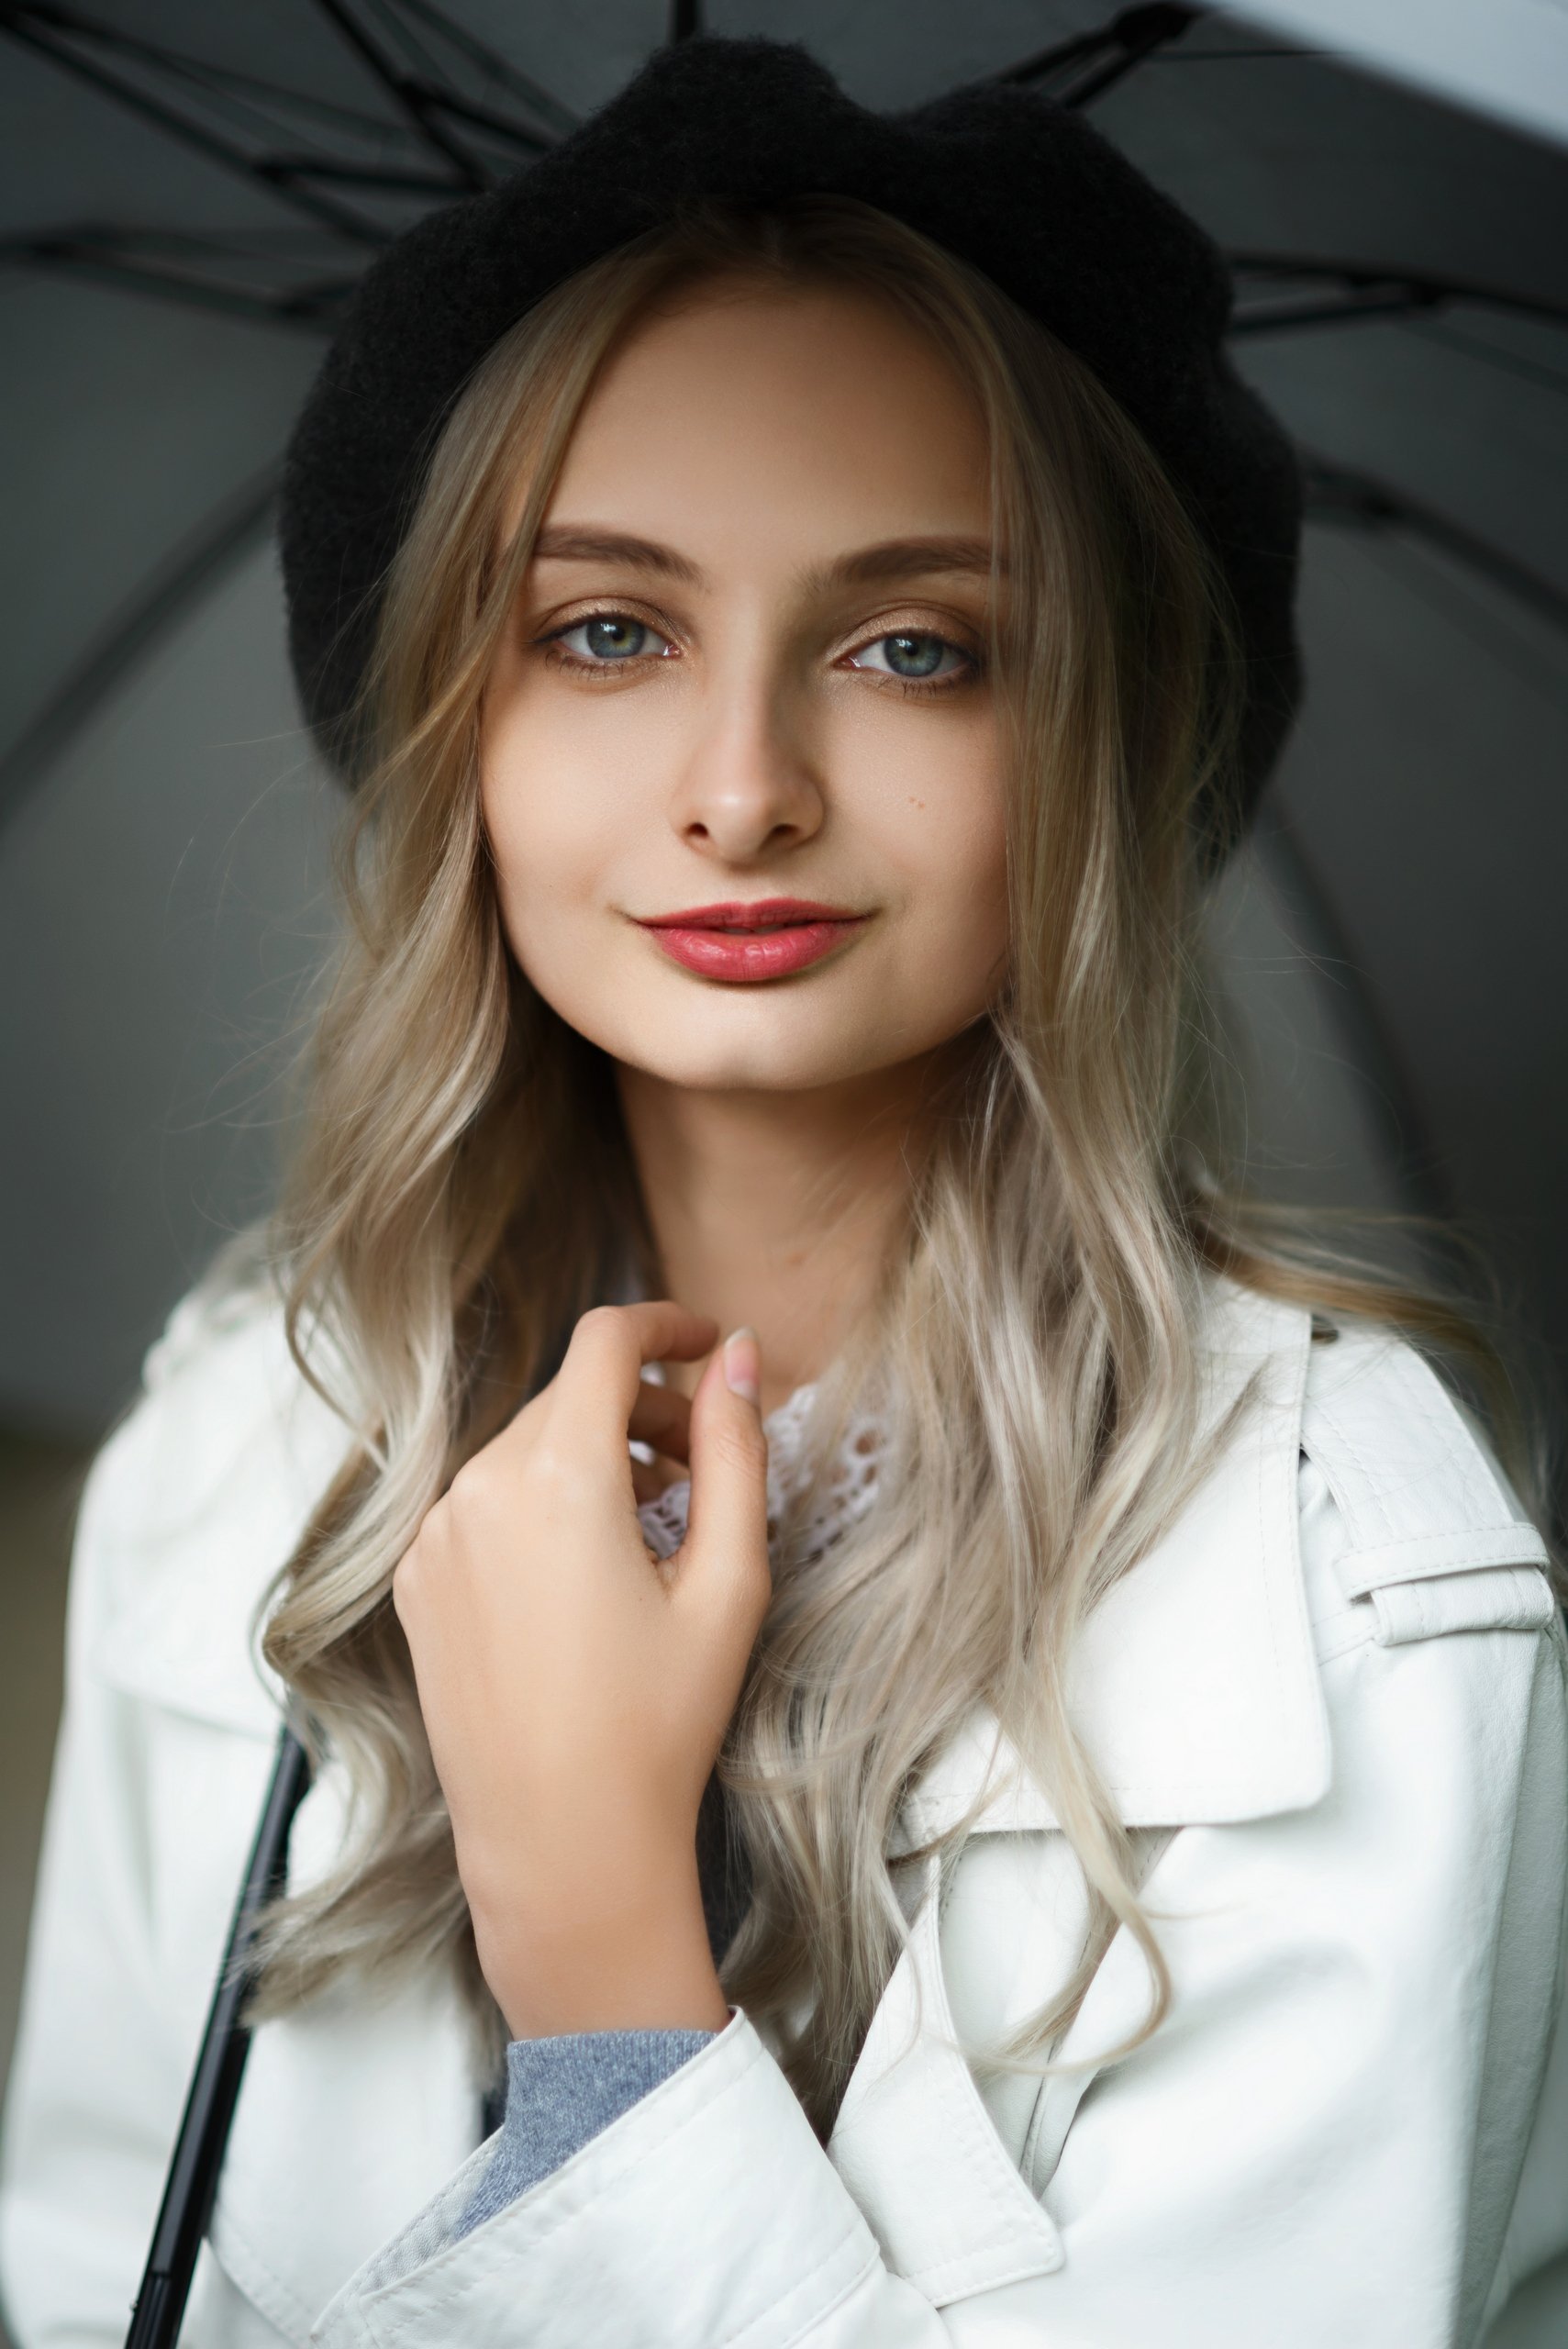 Ksenia, portrait, girl, nikond750,, Черепко Павел